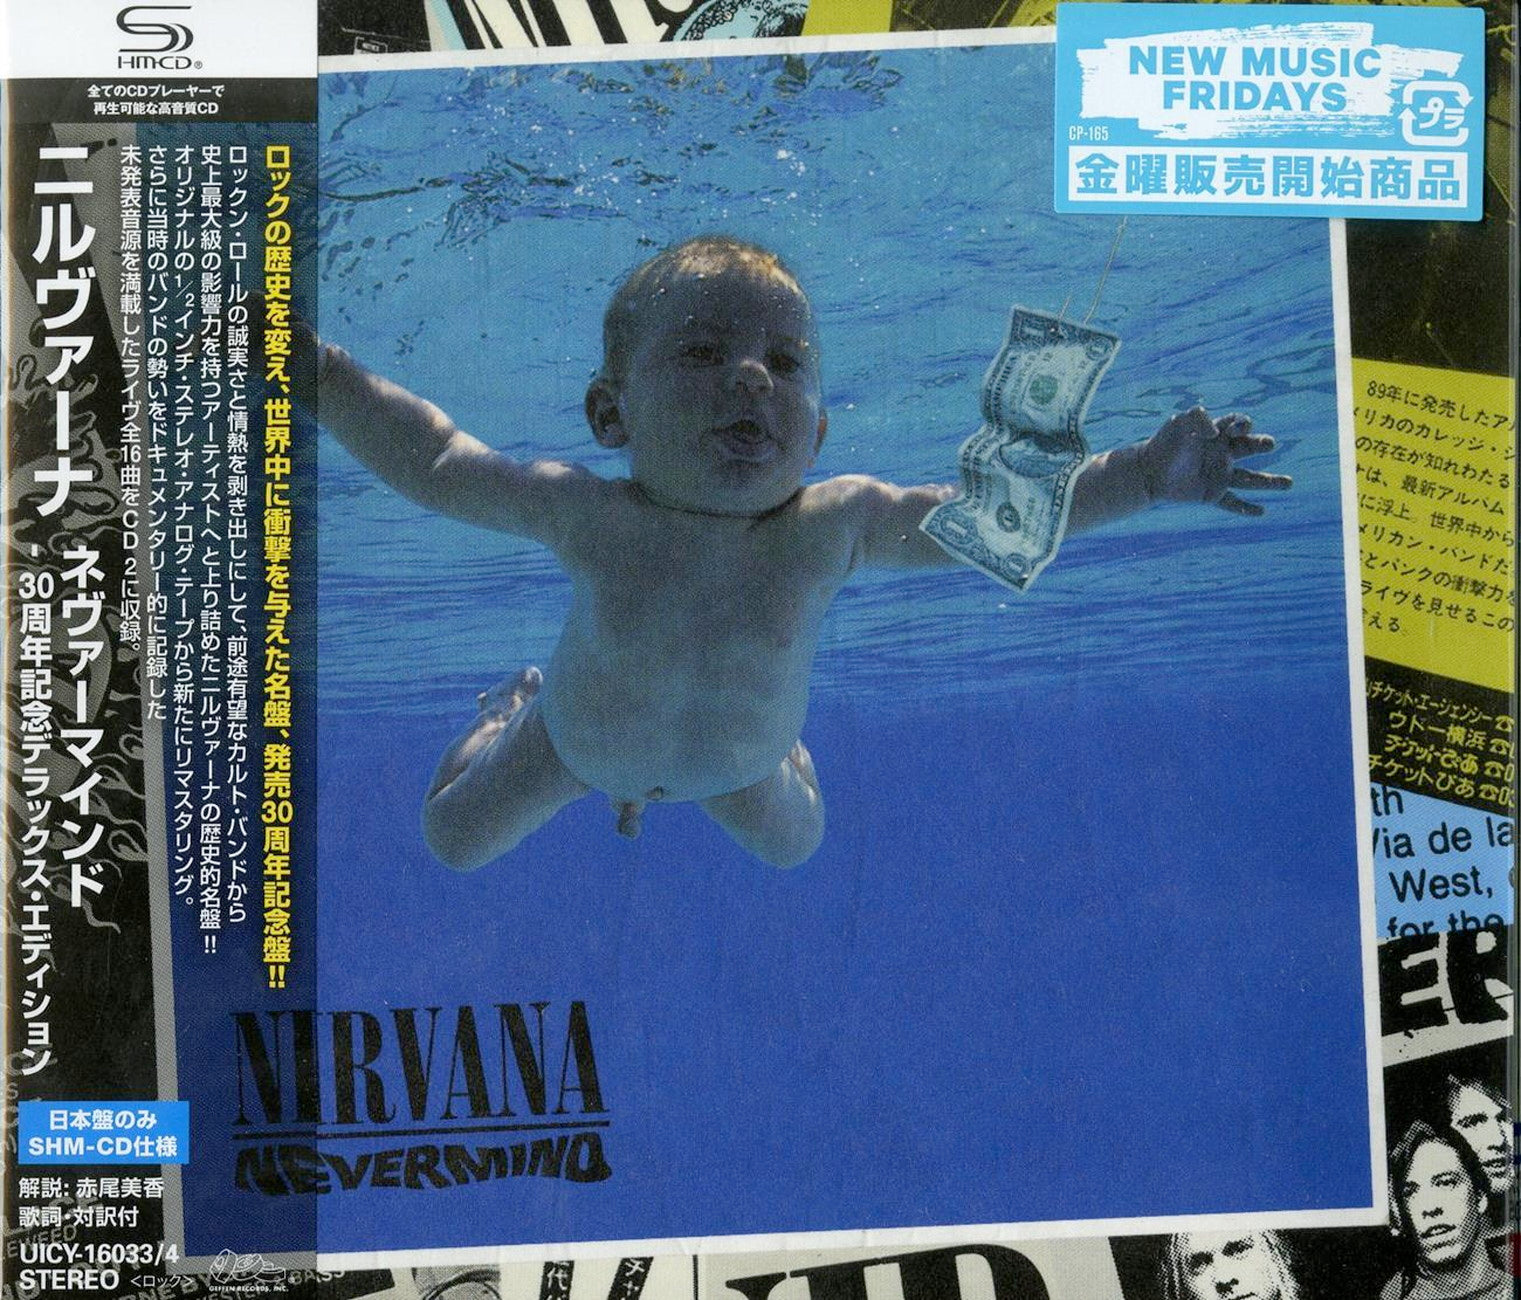 Nirvana - Nevermind (30Th Anniversary Edition) - Japan 2 SHM-CD